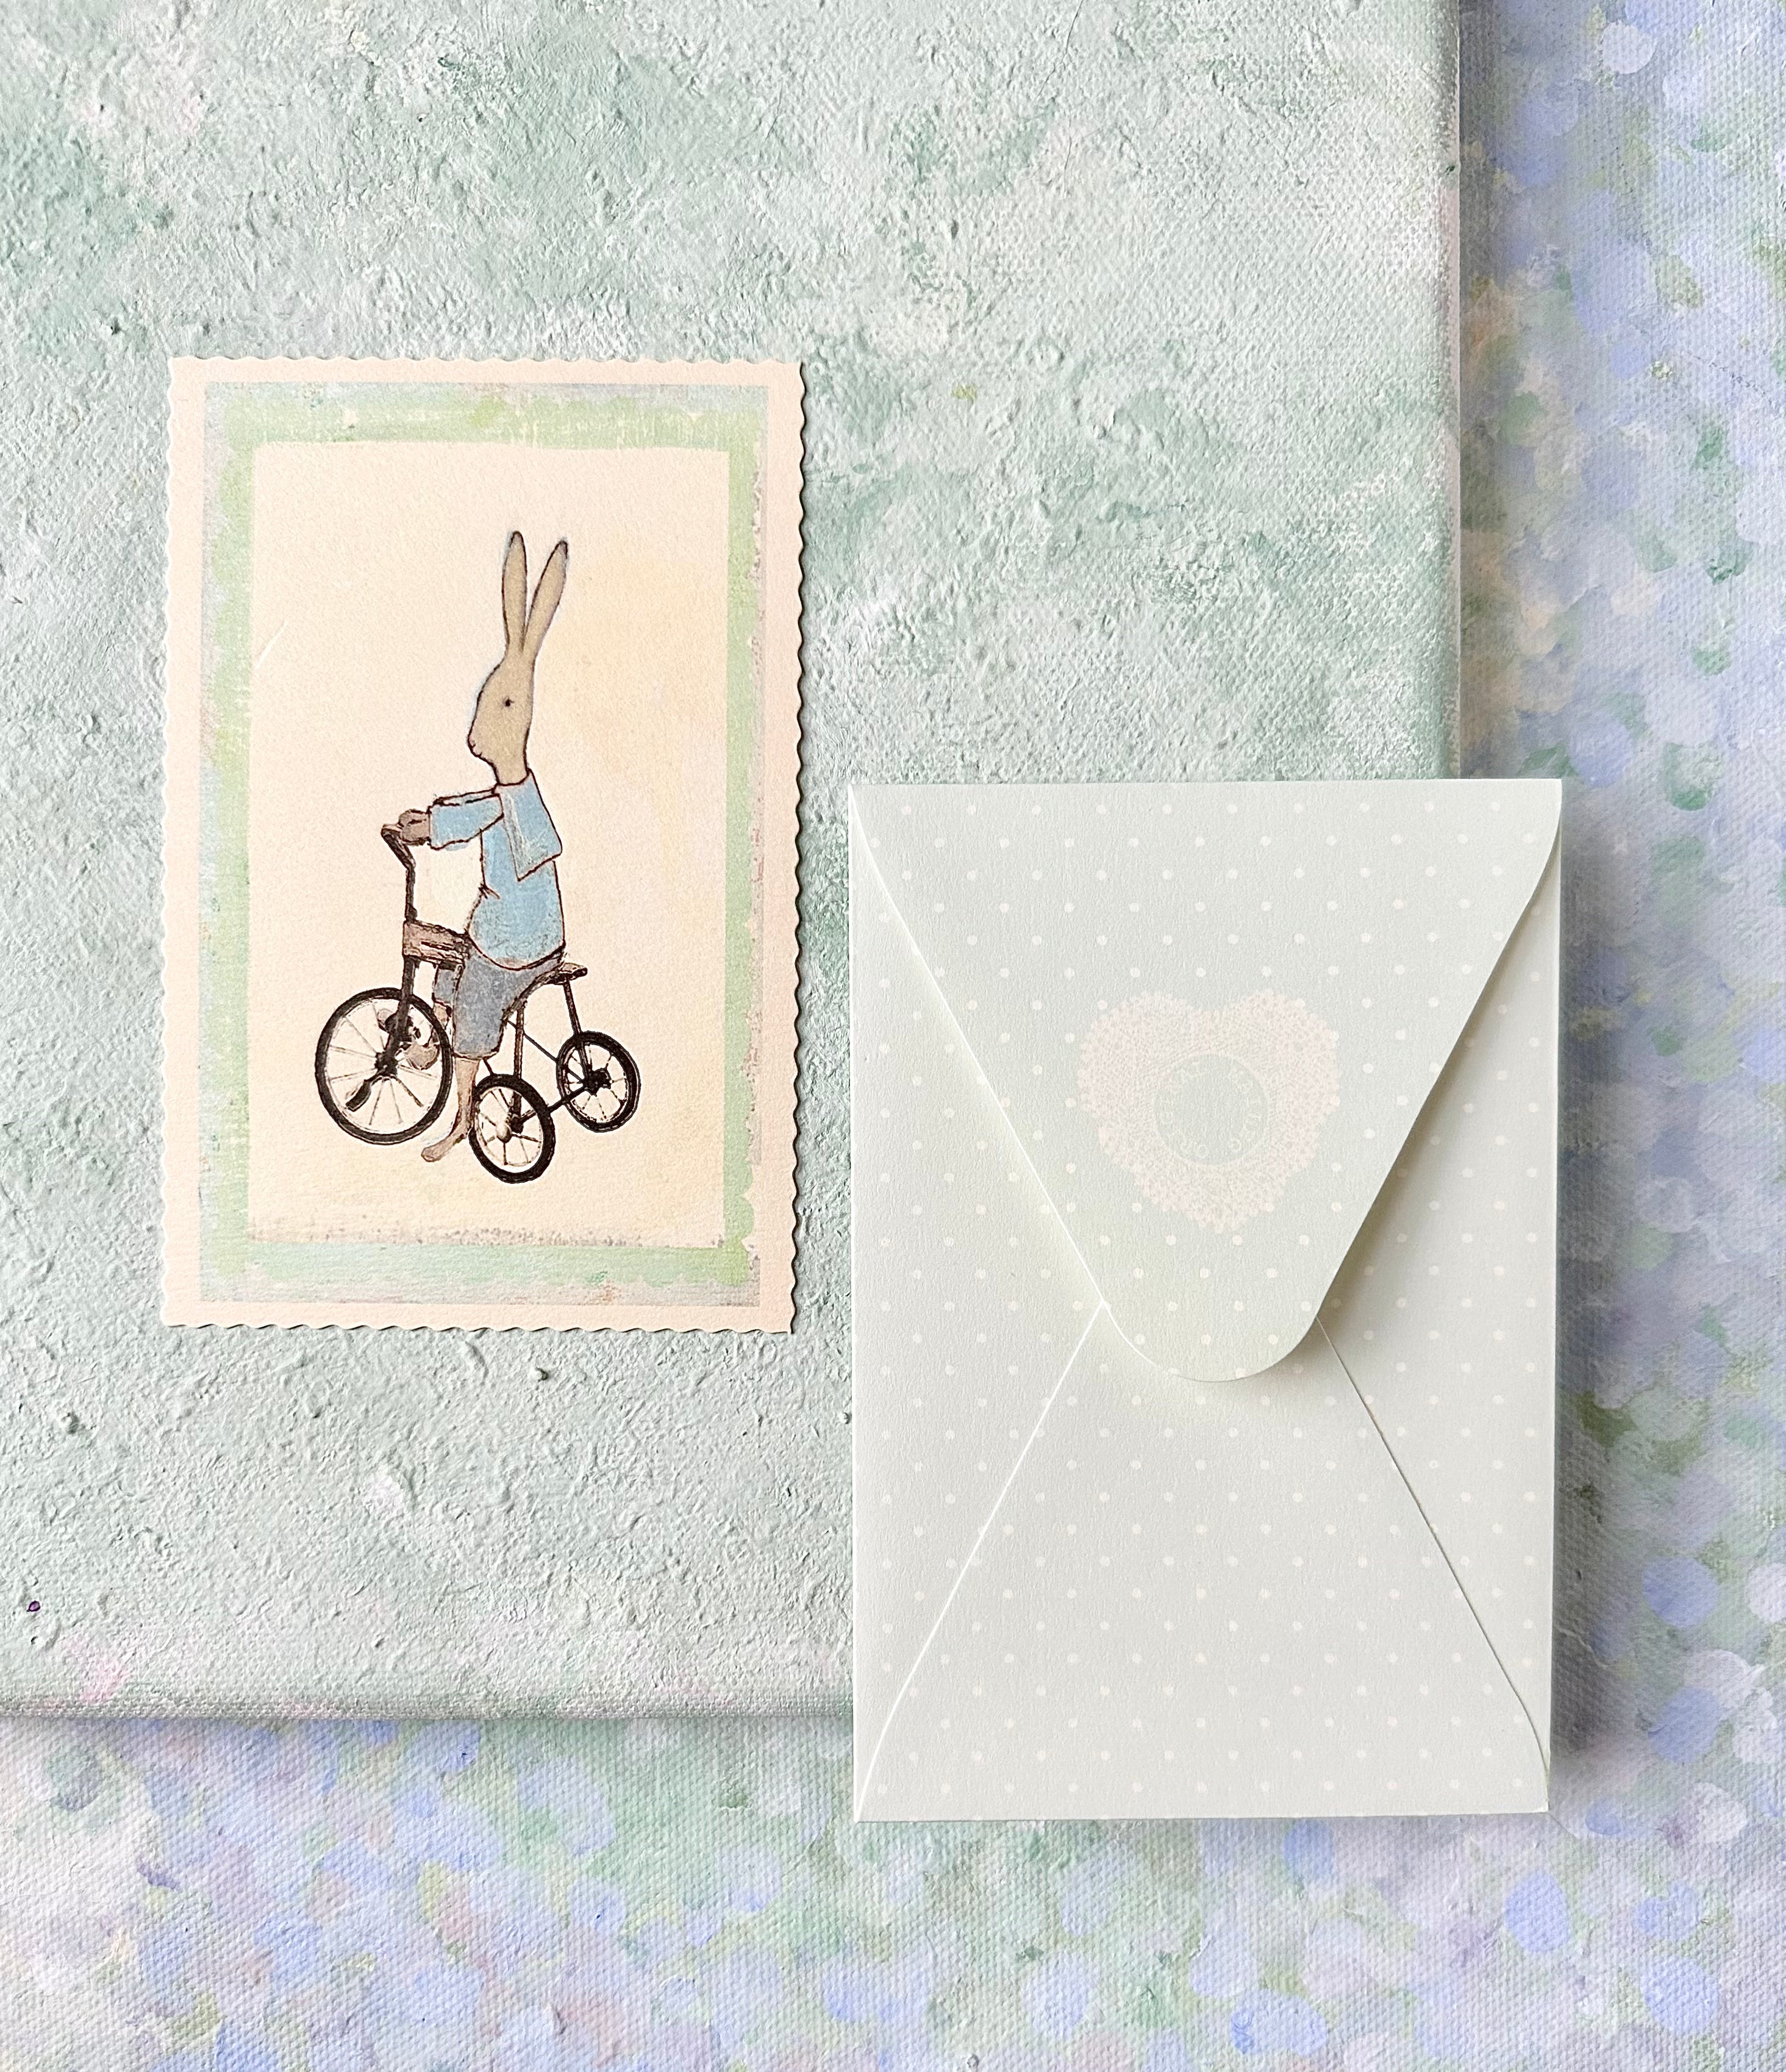 Small Card “Rabbit on Bike” - 2010